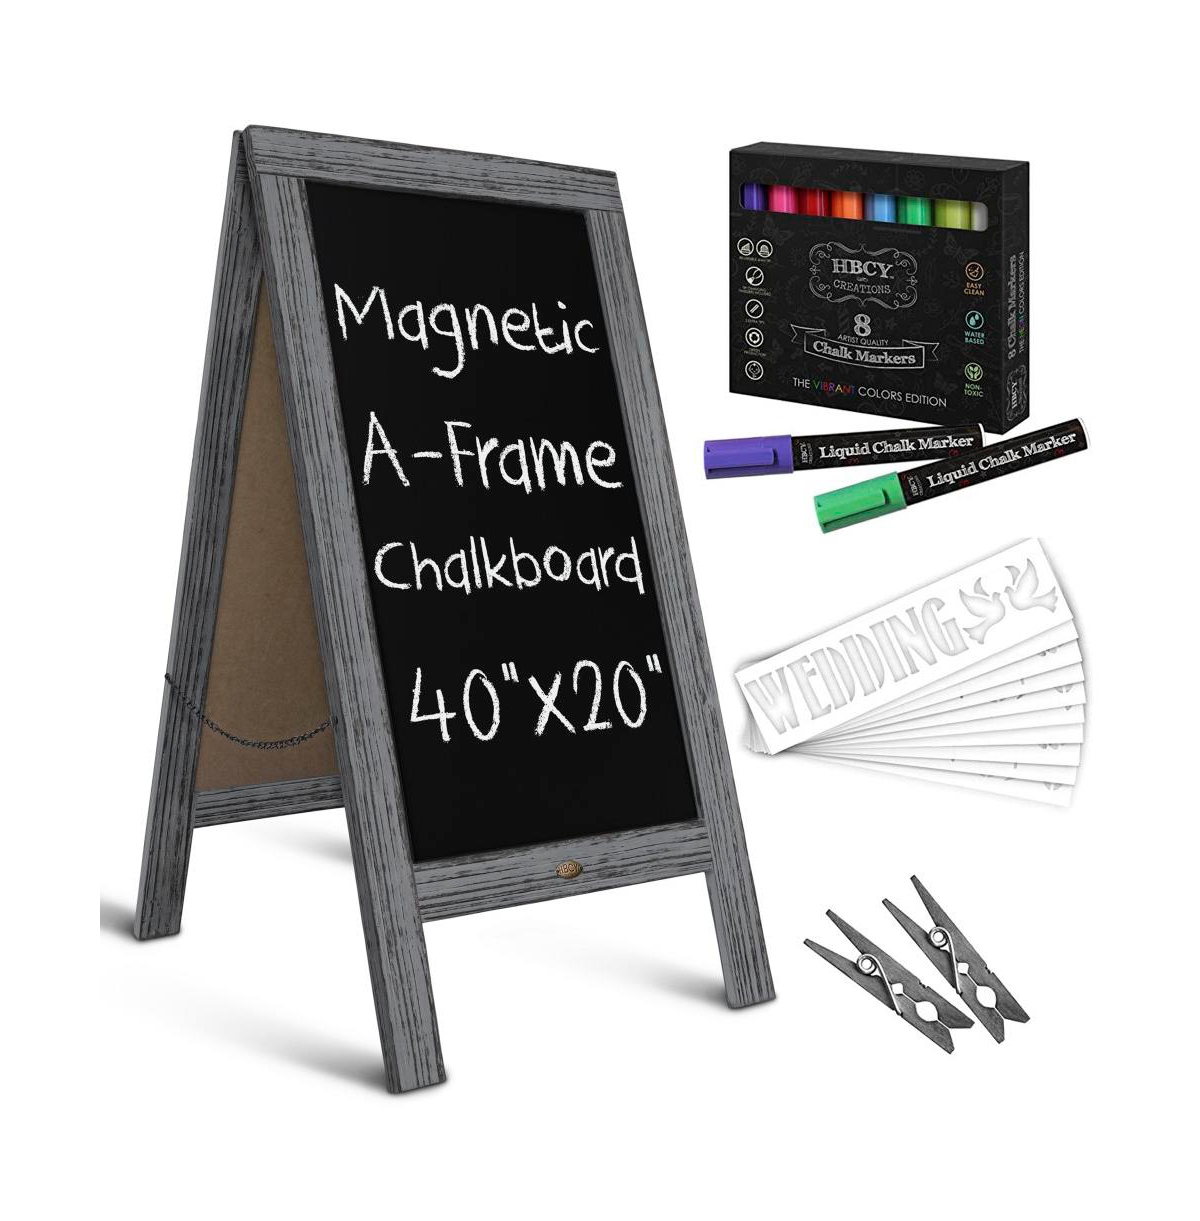 A-Frame Chalkboard / Sidewalk Chalkboard Sign / Large Sturdy Sandwich Board / A Frame Restaurant Message Board - Solid white